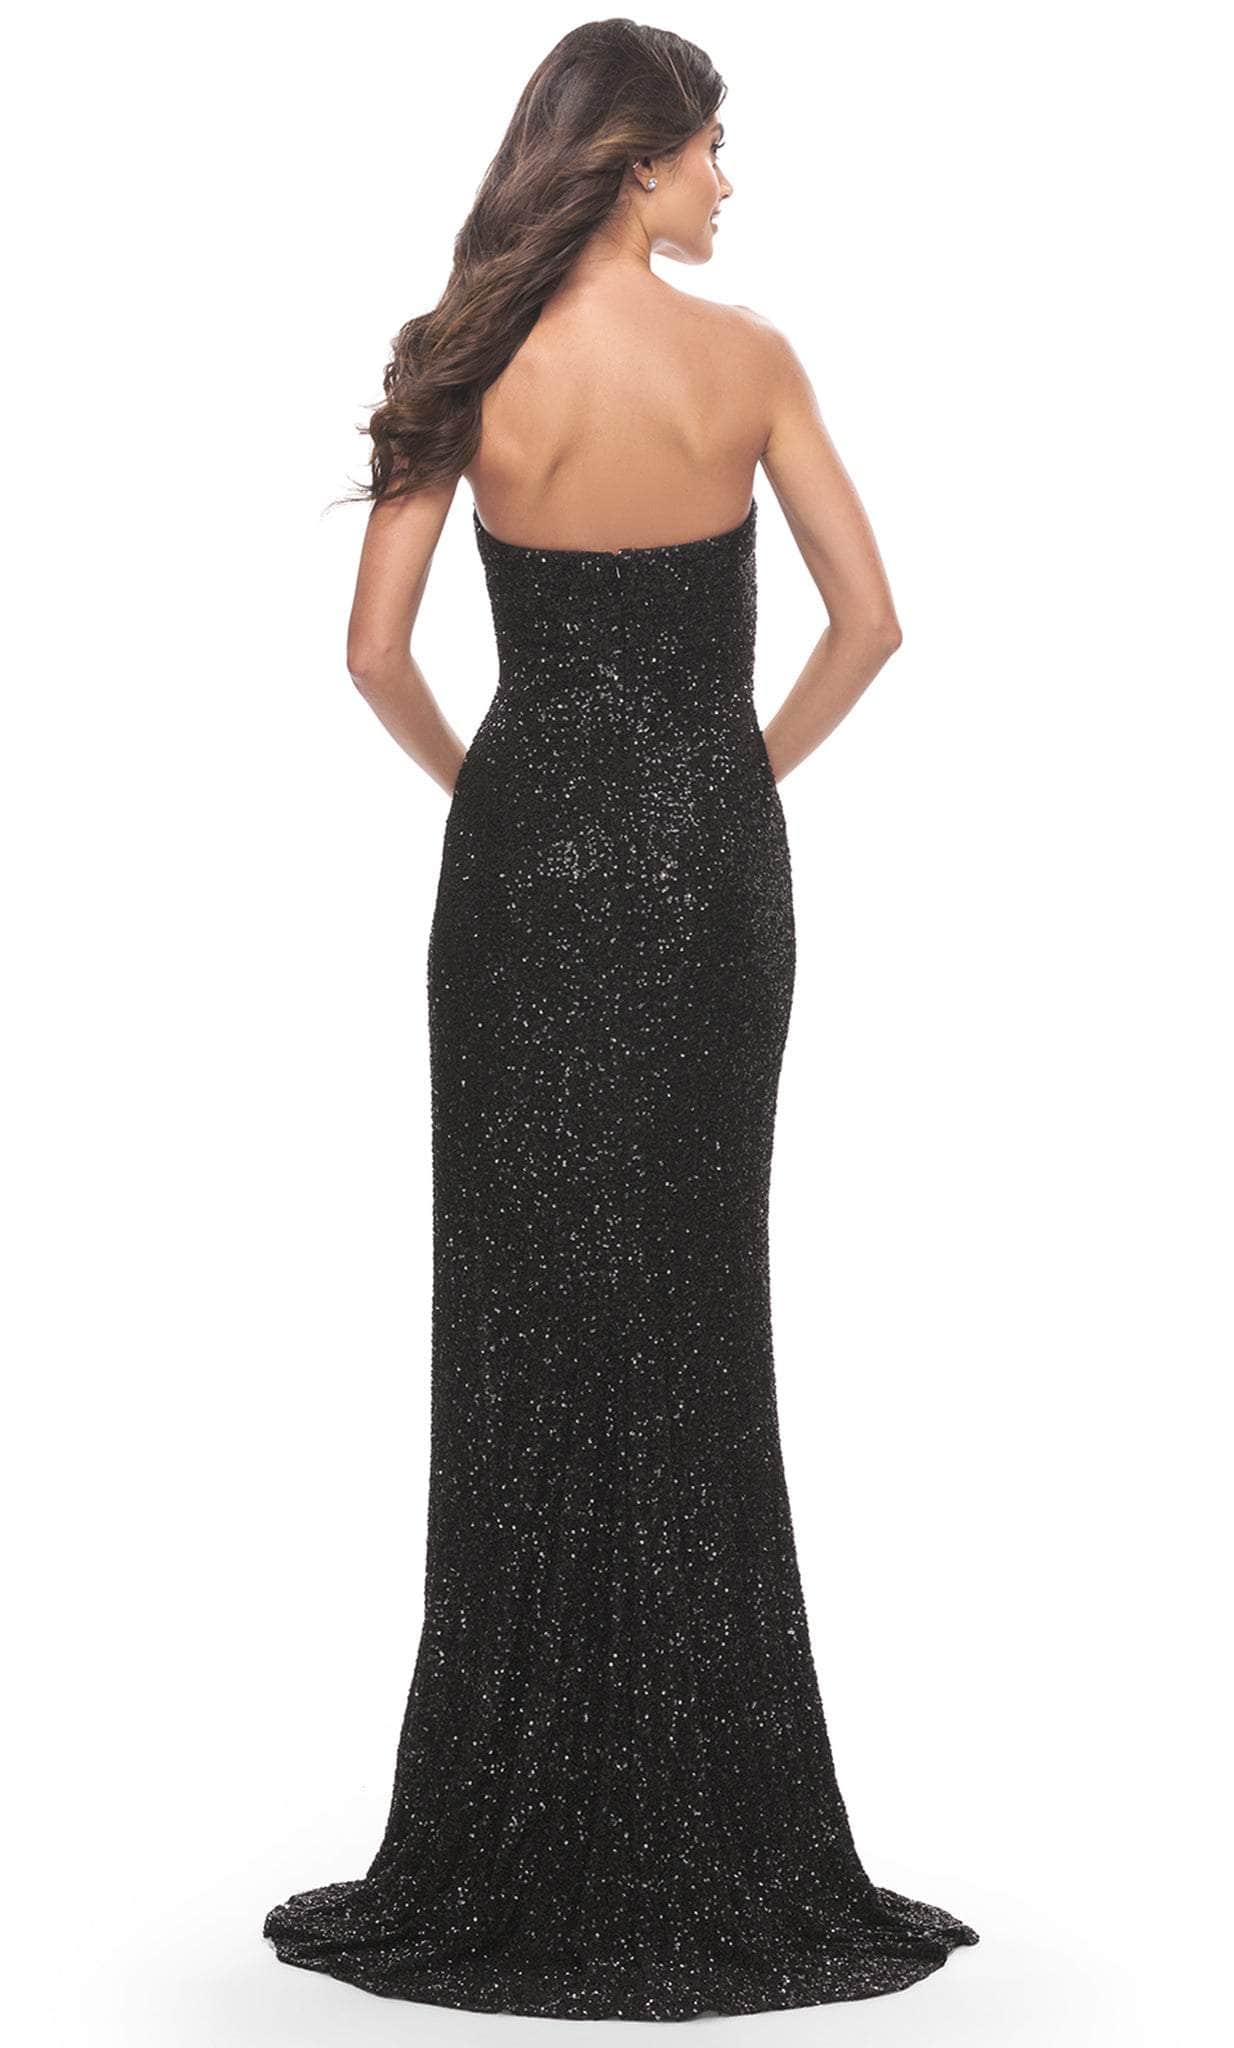 La Femme 31538 - Glittered Gown